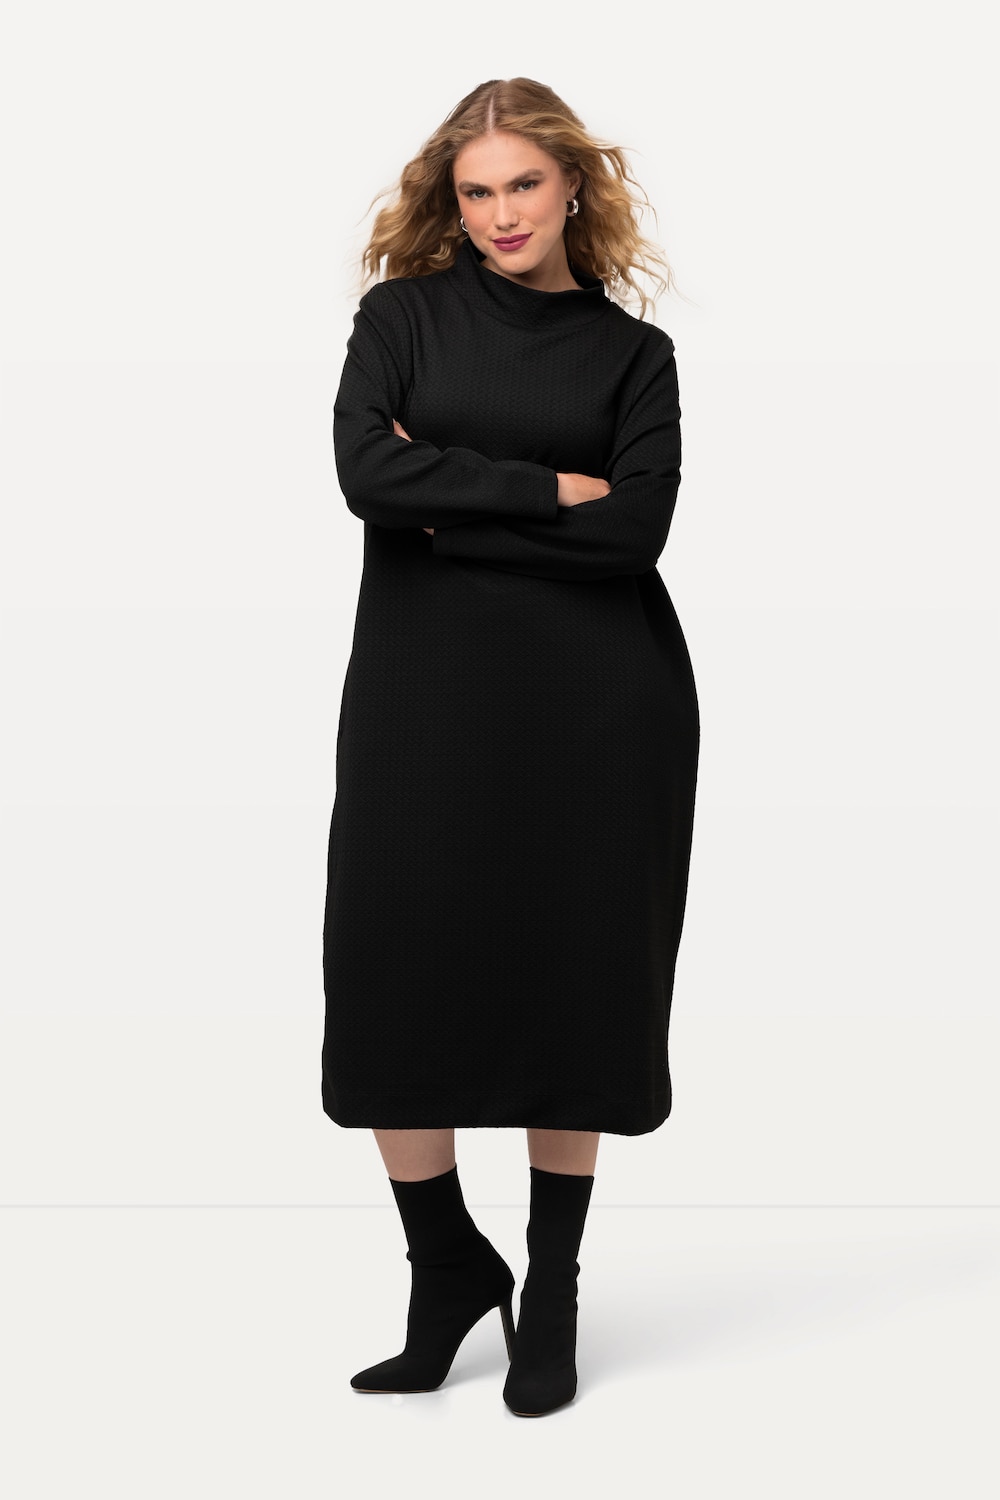 Große Größen Sweatkleid, Damen, schwarz, Größe: 42/44, Polyester, Ulla Popken